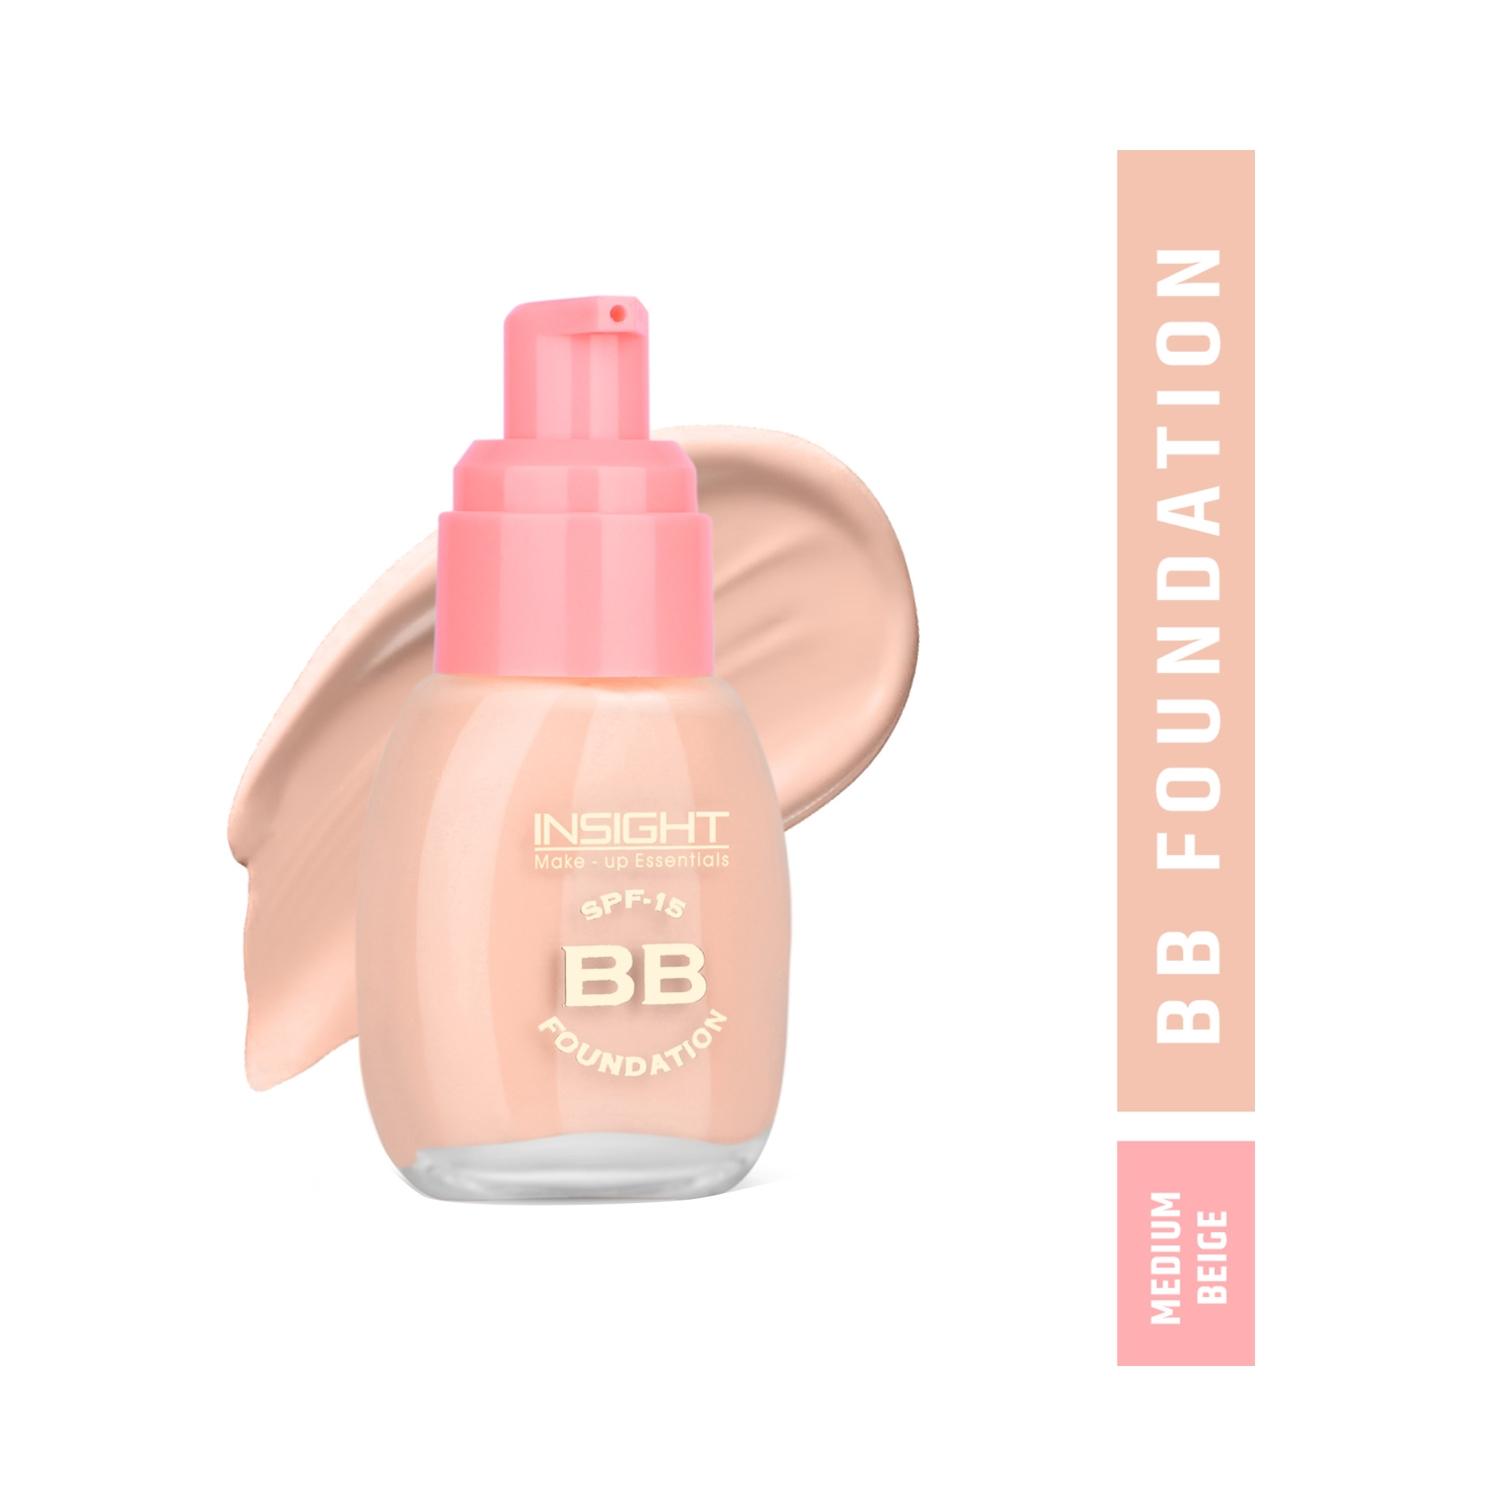 insight cosmetics bb foundation spf 15 - medium beige (30ml)